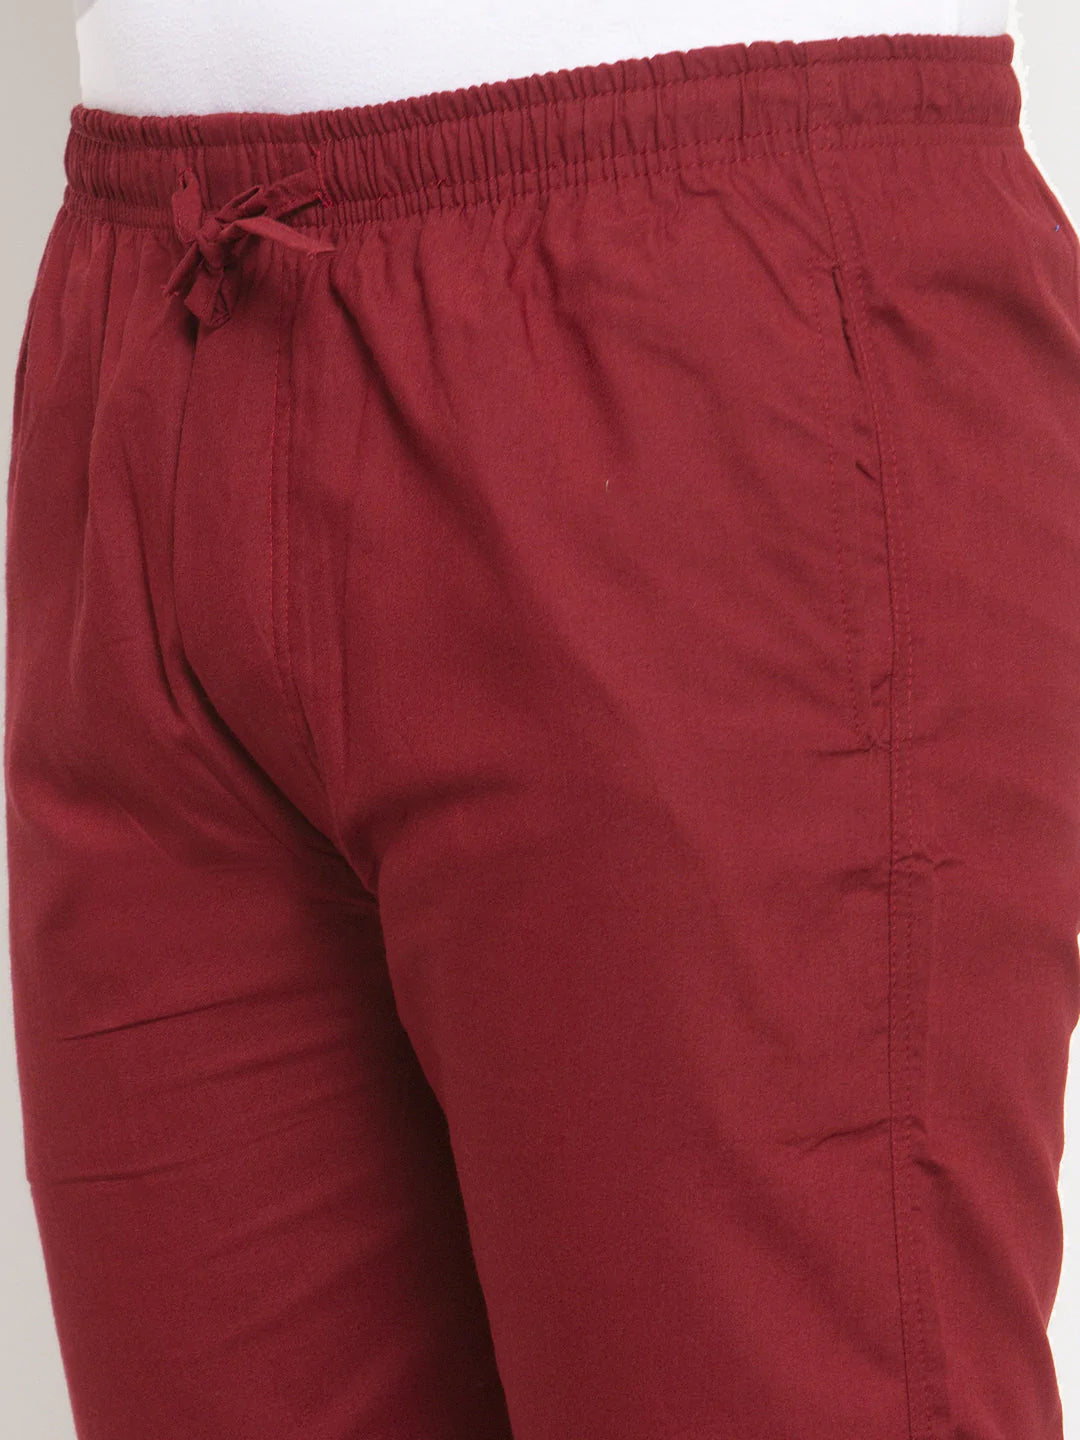 Jainish Men's Maroon Solid Cotton Track Pants ( JOG 011Maroon )